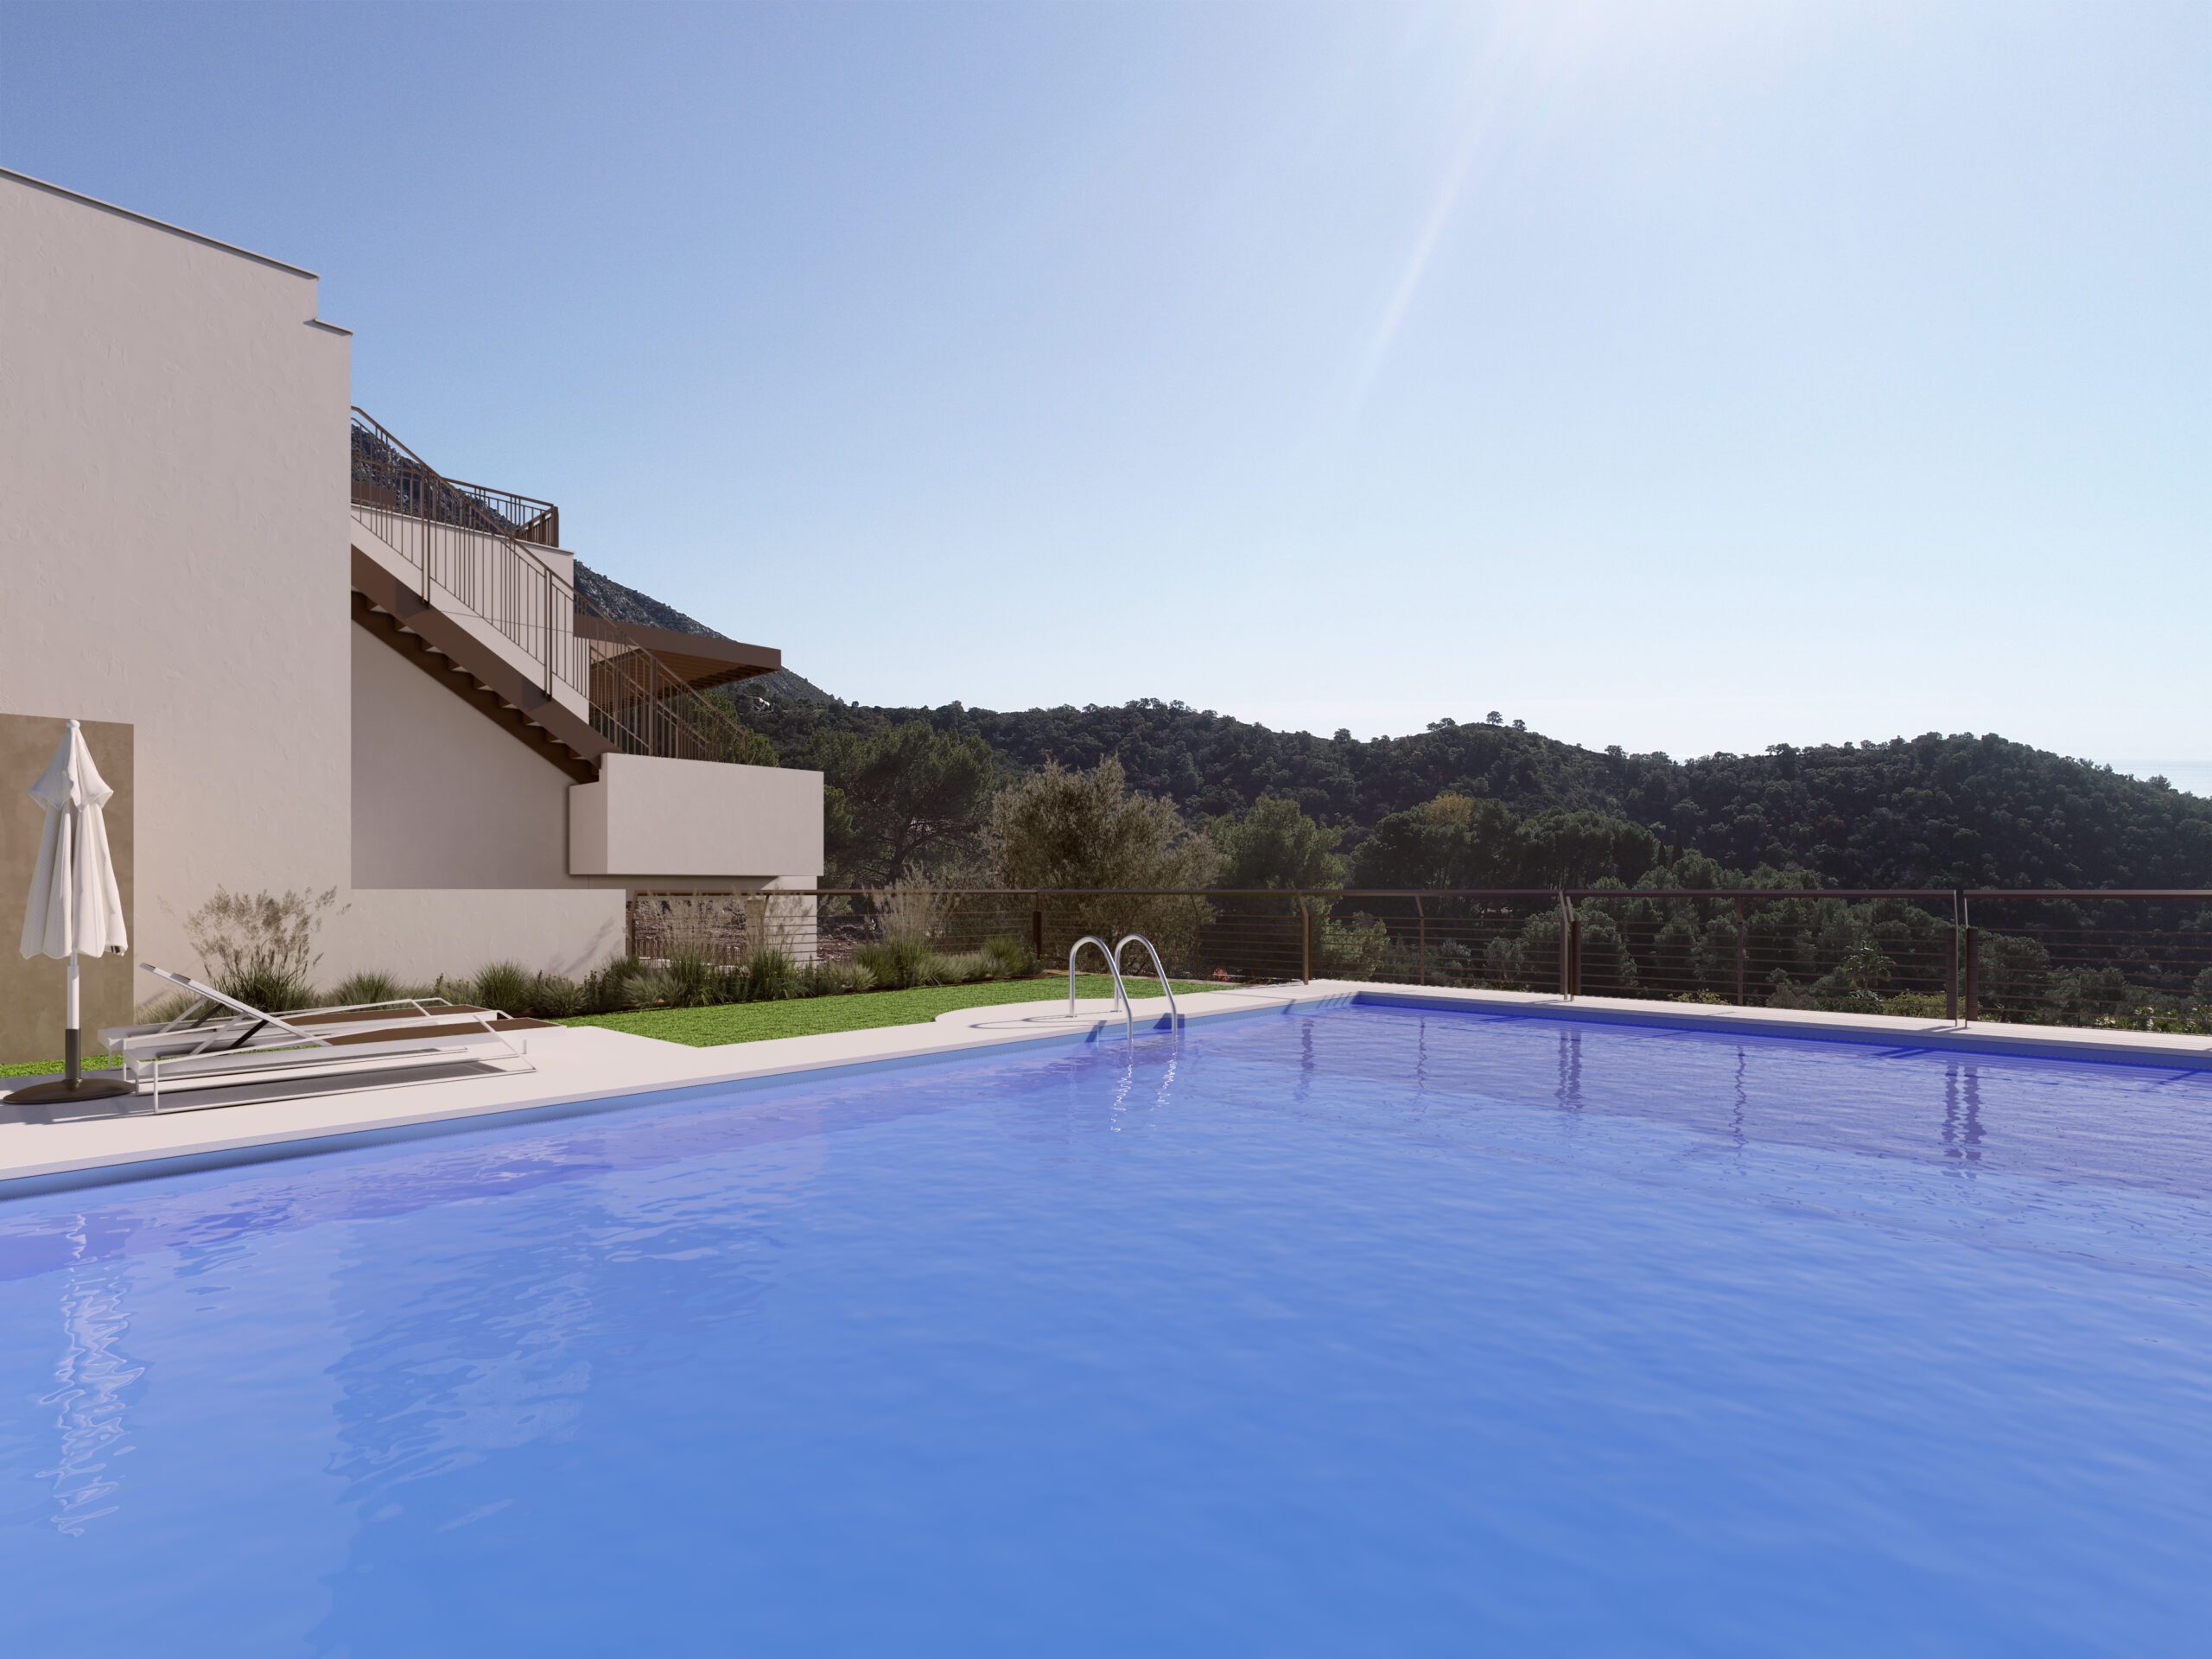 Almazara Hills apartments swimming pool